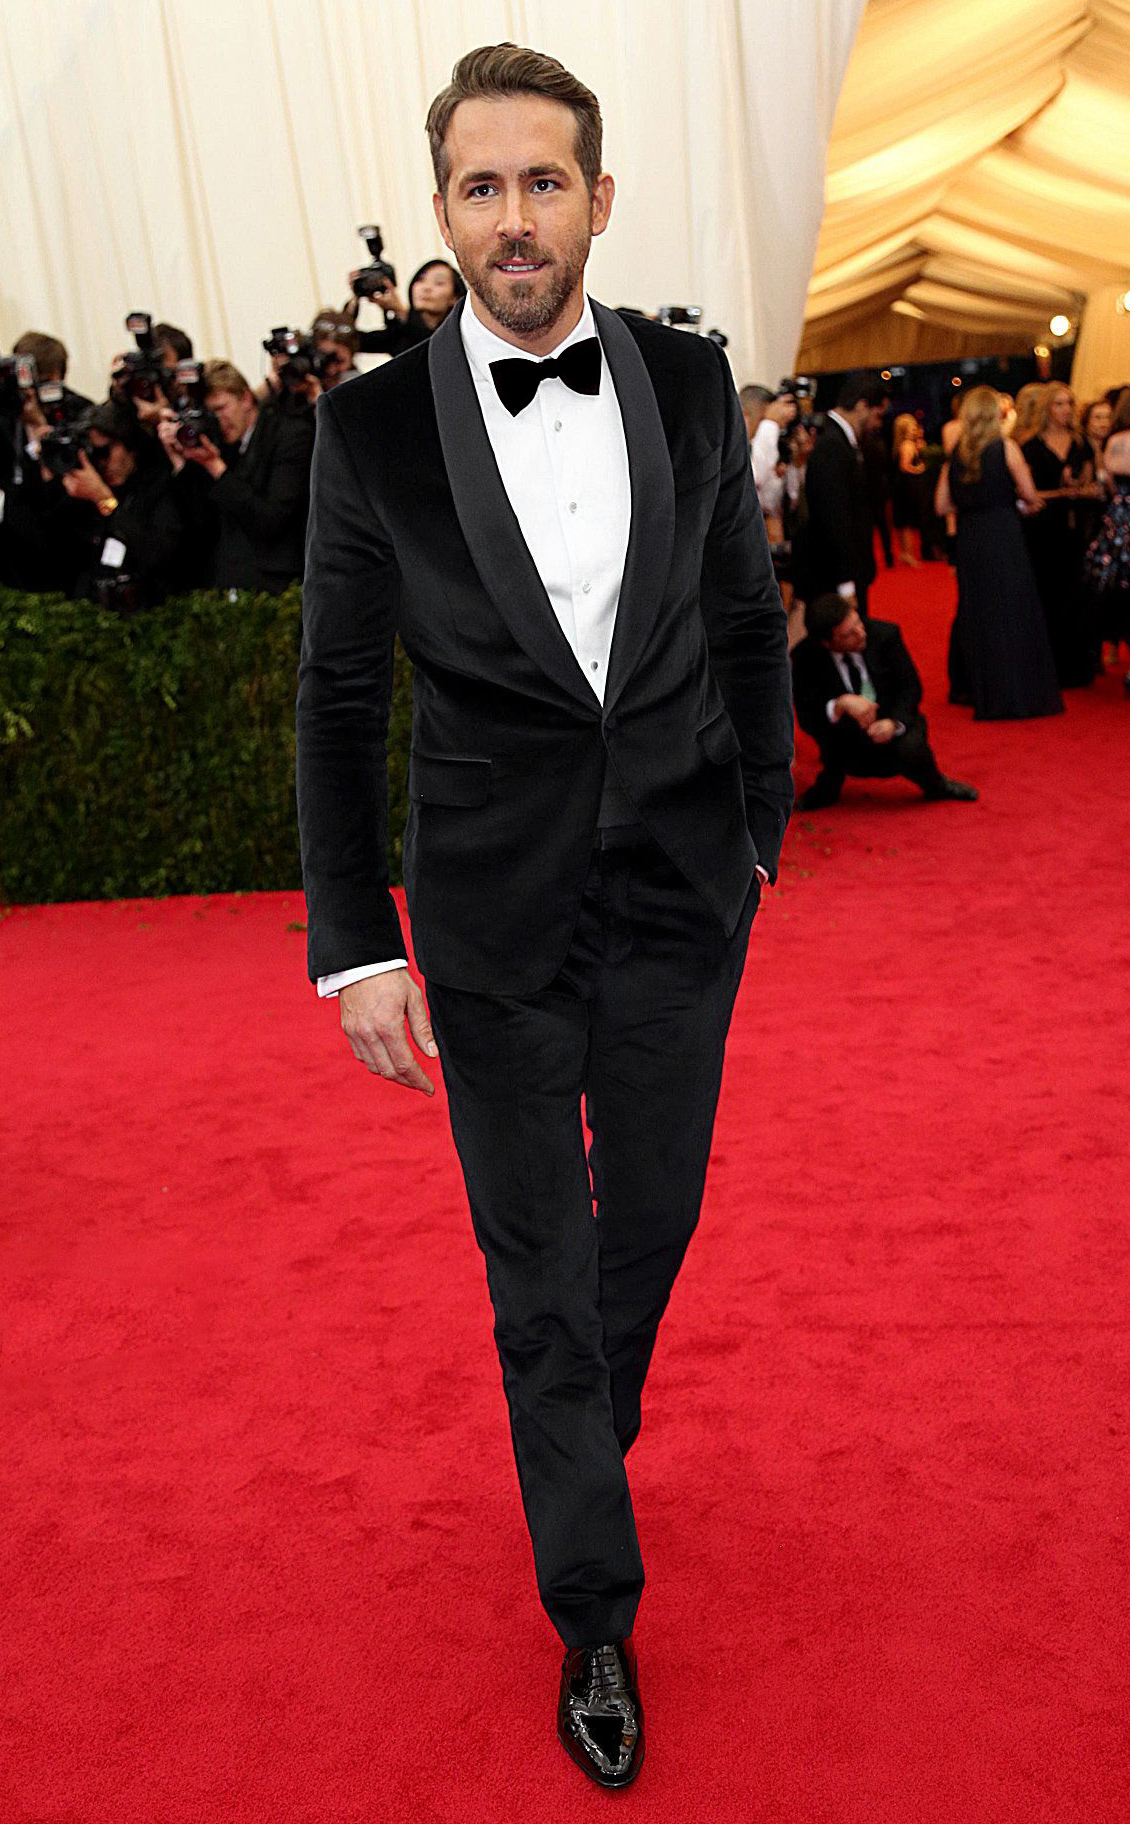 Ryan Reynolds wears black-tie attire at an award ceremony